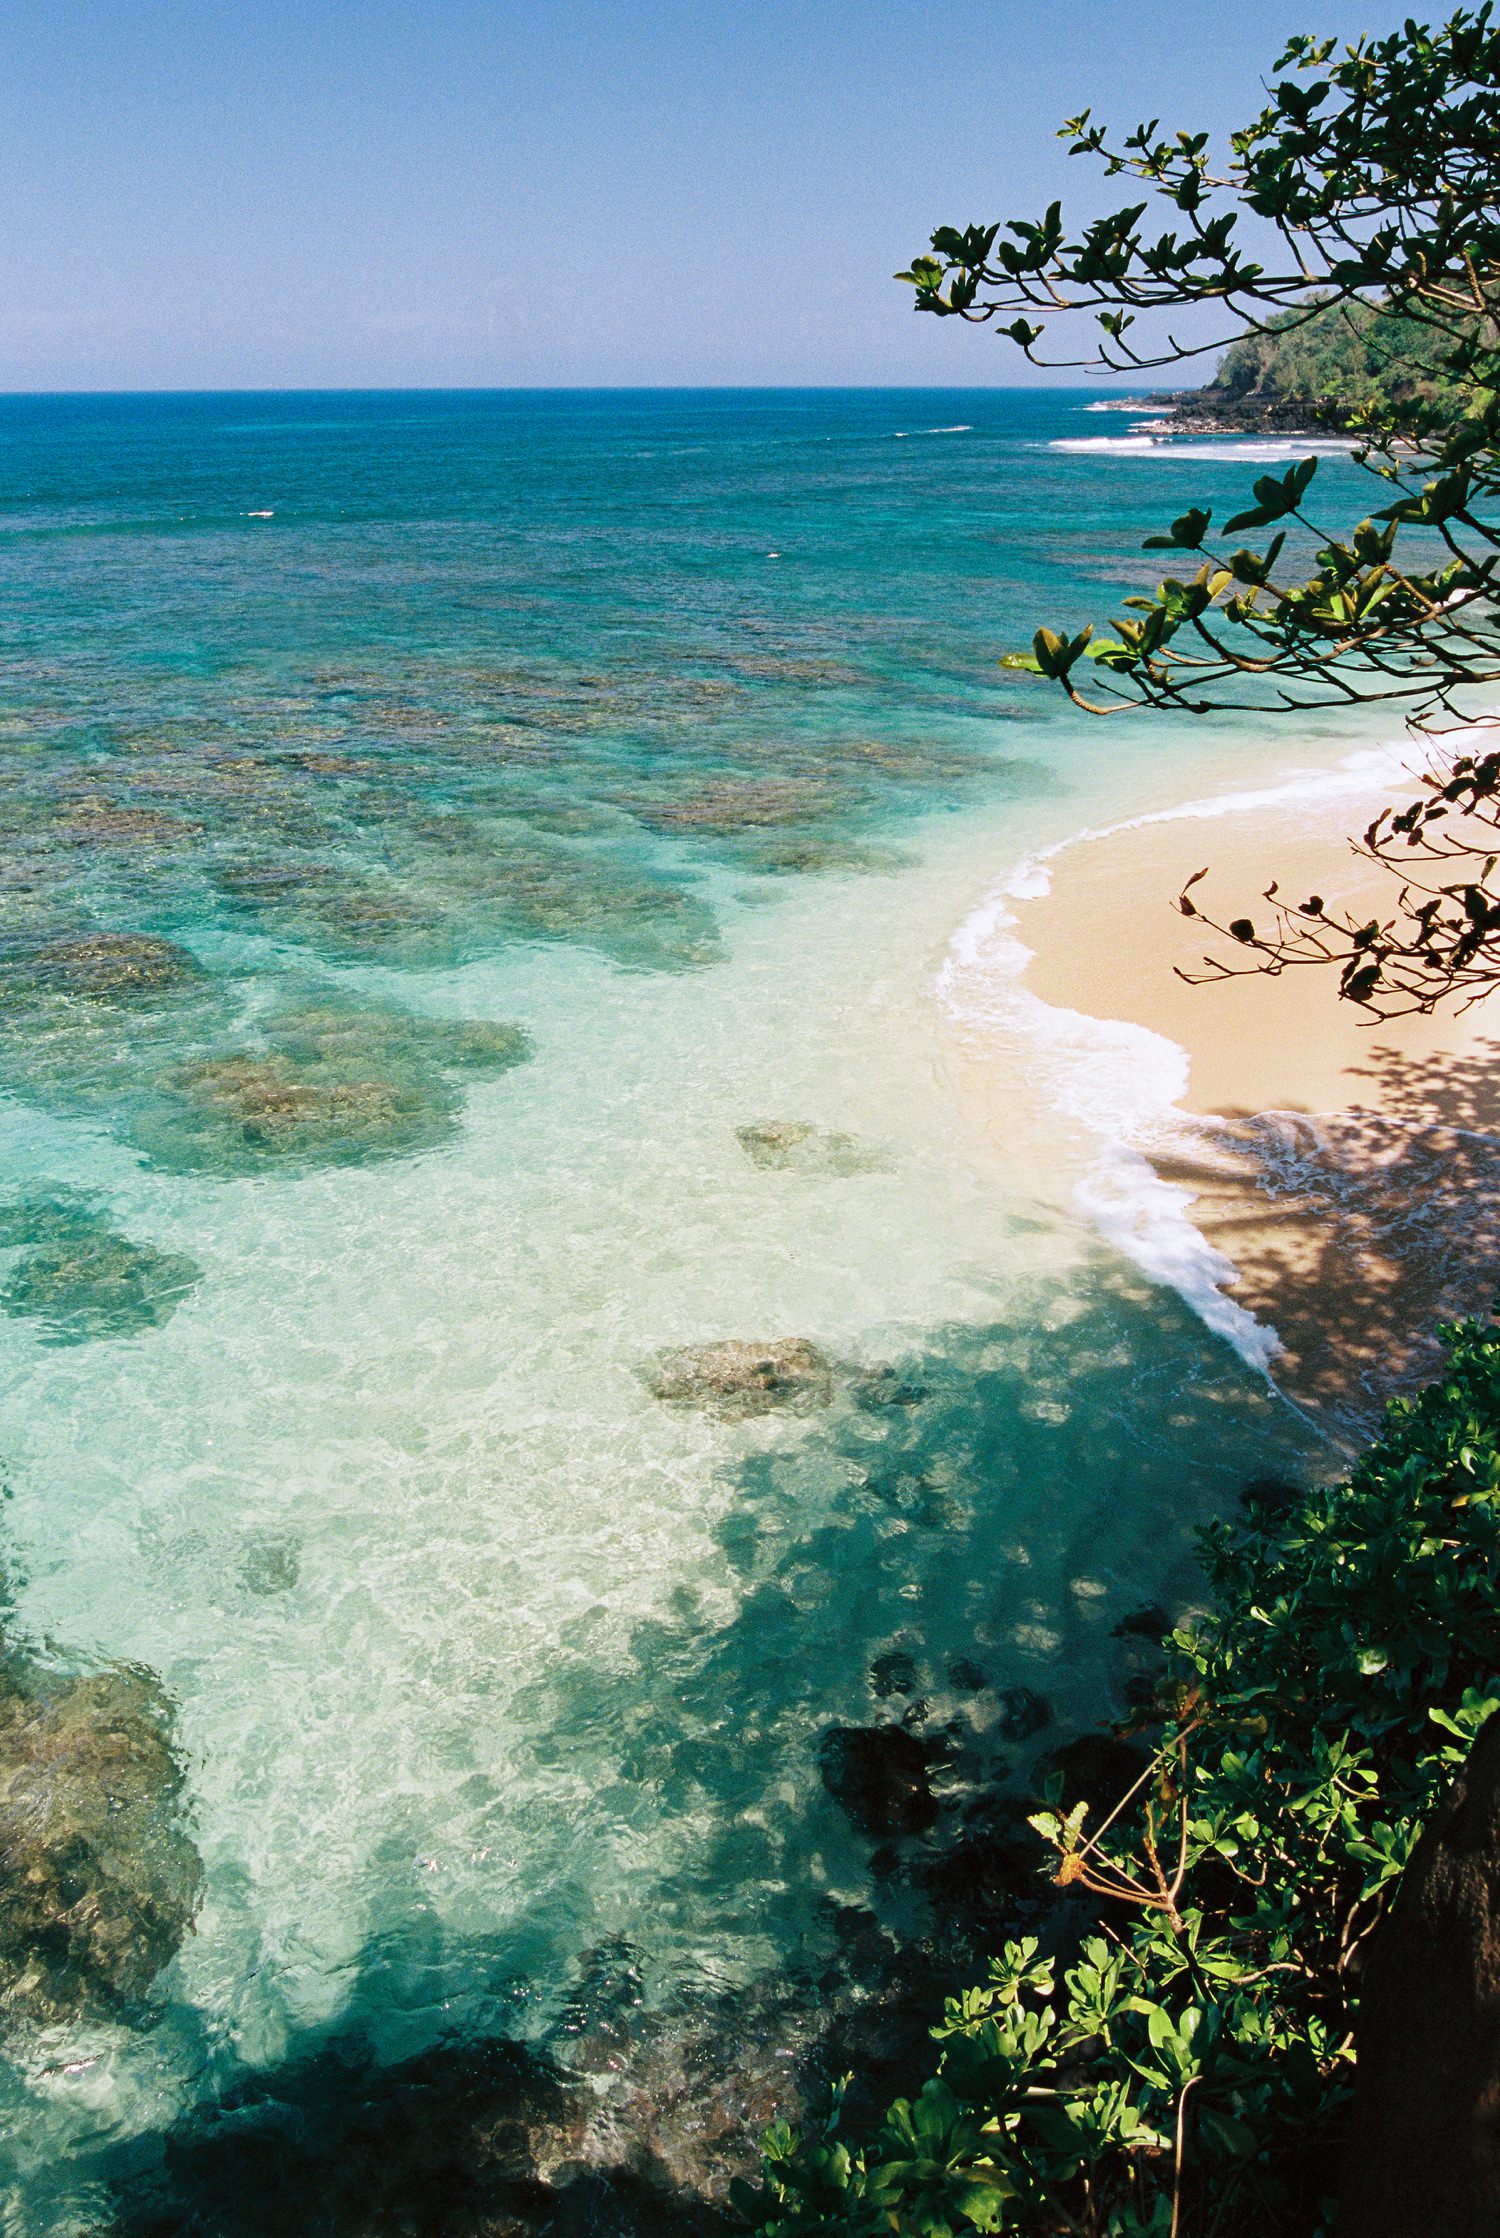 hidden-beach-kauai-hawaii-cameron-zegers-photography.jpg